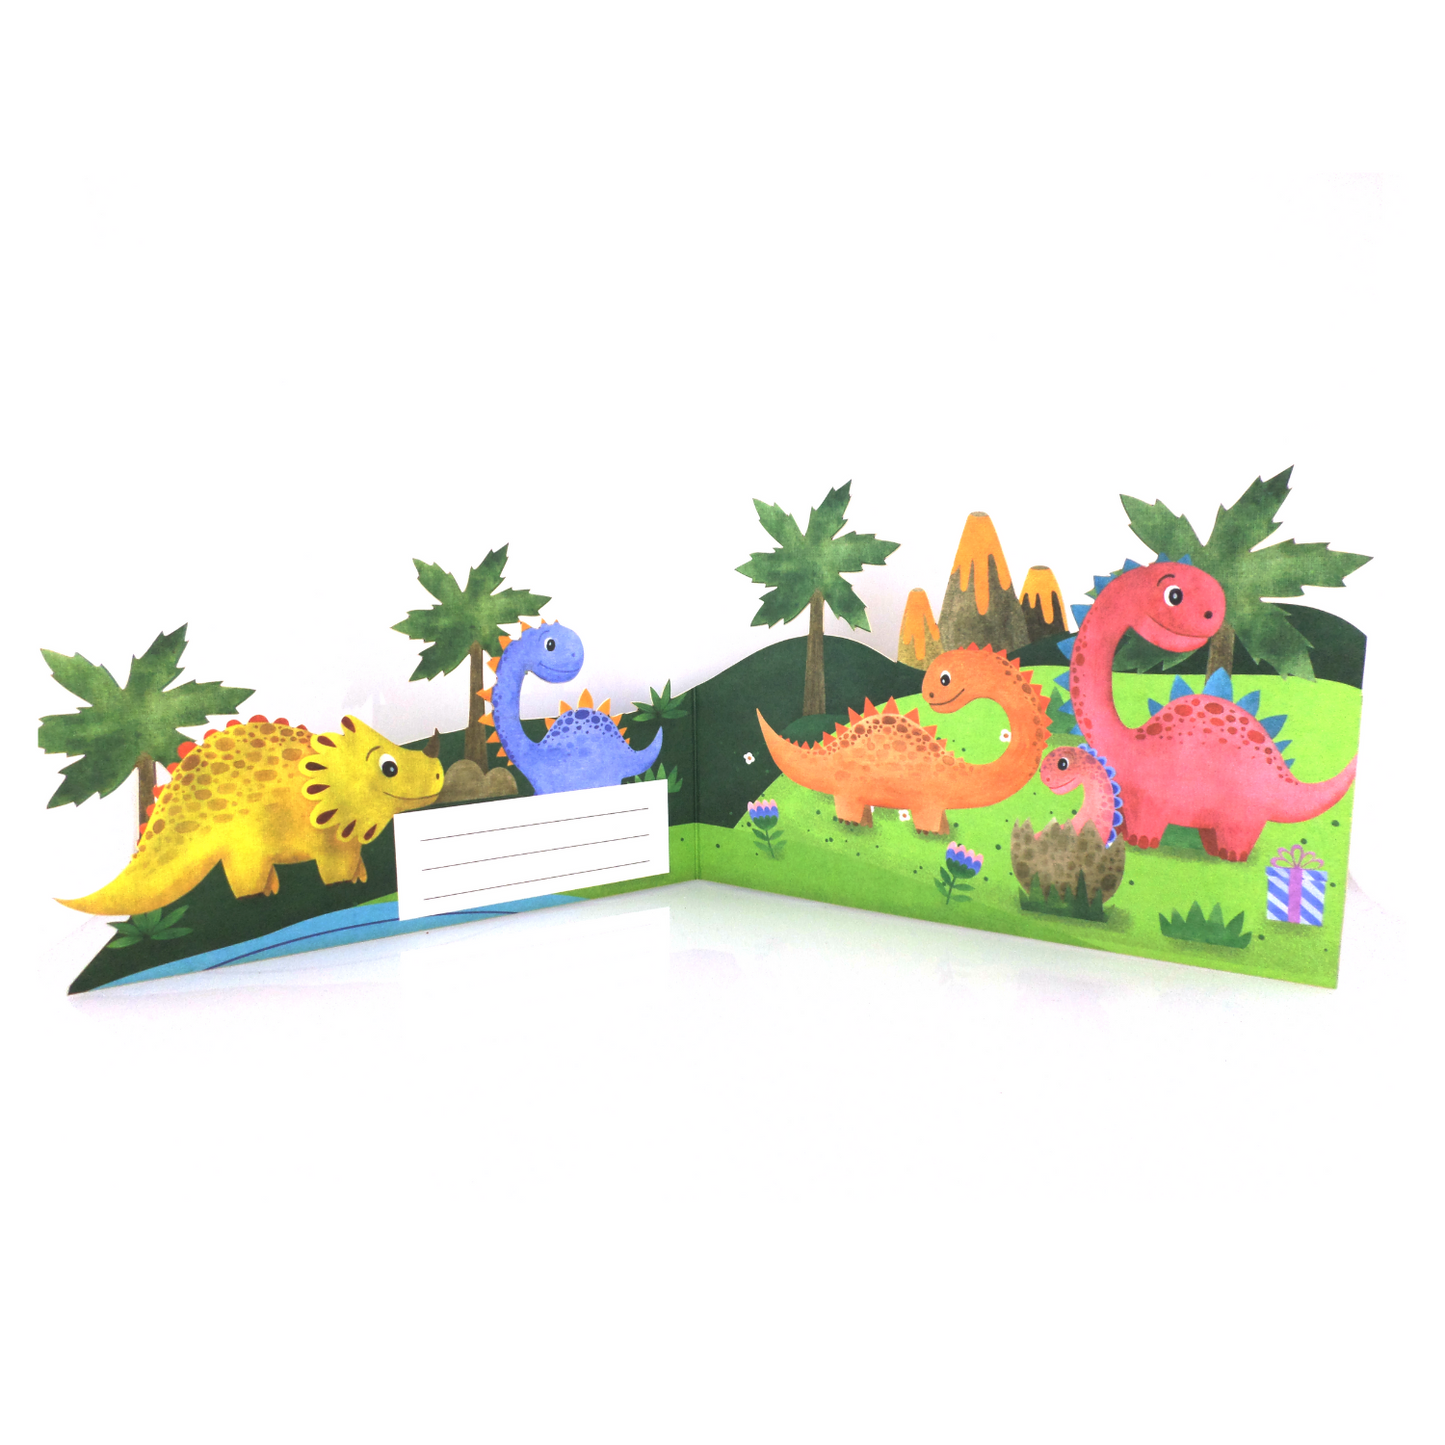 Dinosaurs Rawsome 3D Pop Up Birthday Card For Child